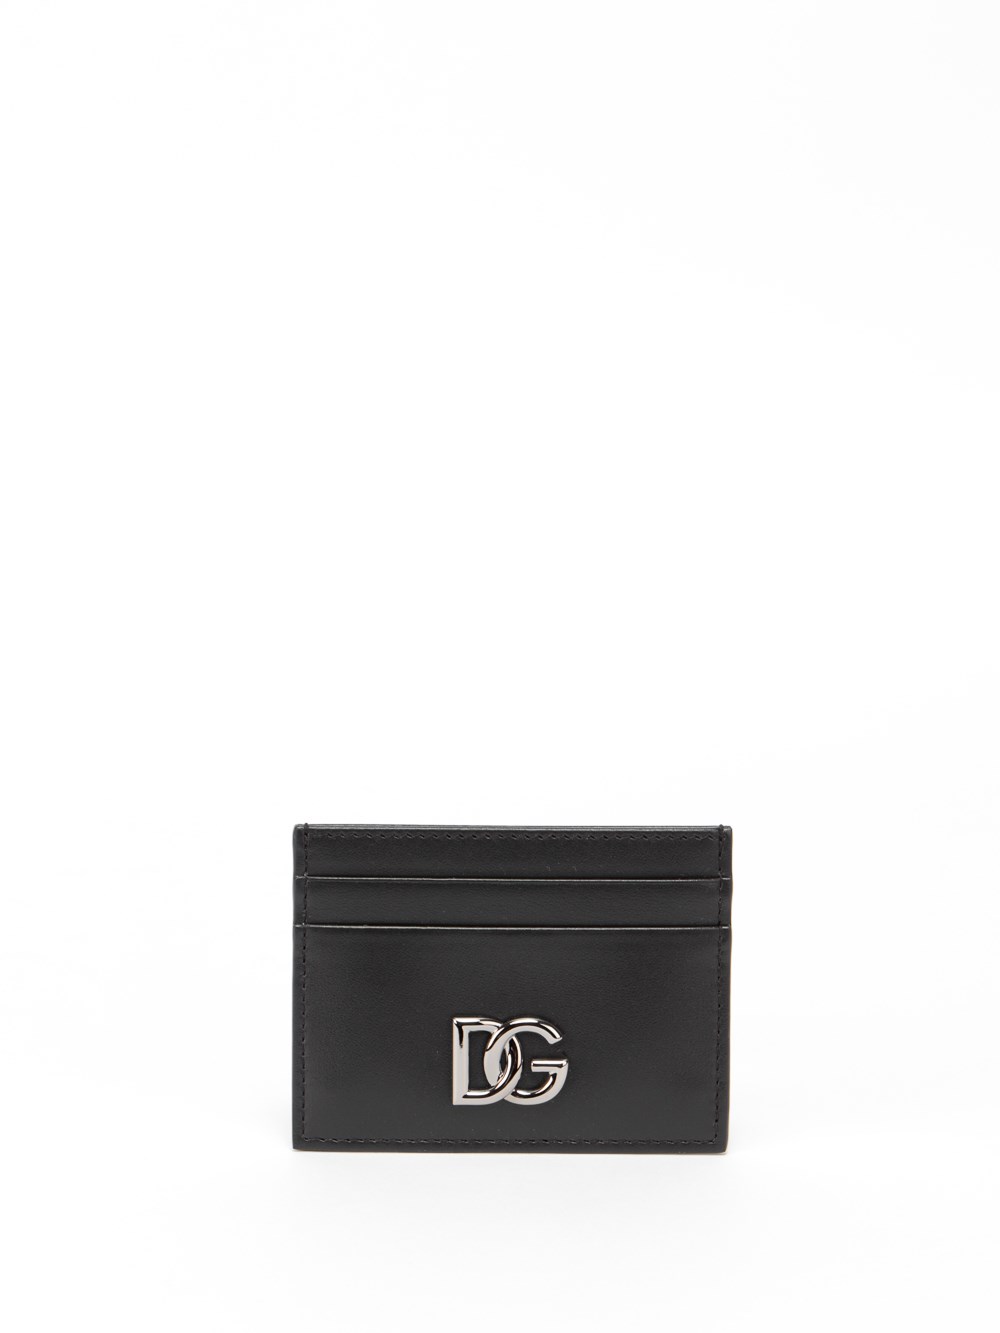 Dolce & Gabbana Card Holder With Crossover `dg` Logo In Nero | ModeSens